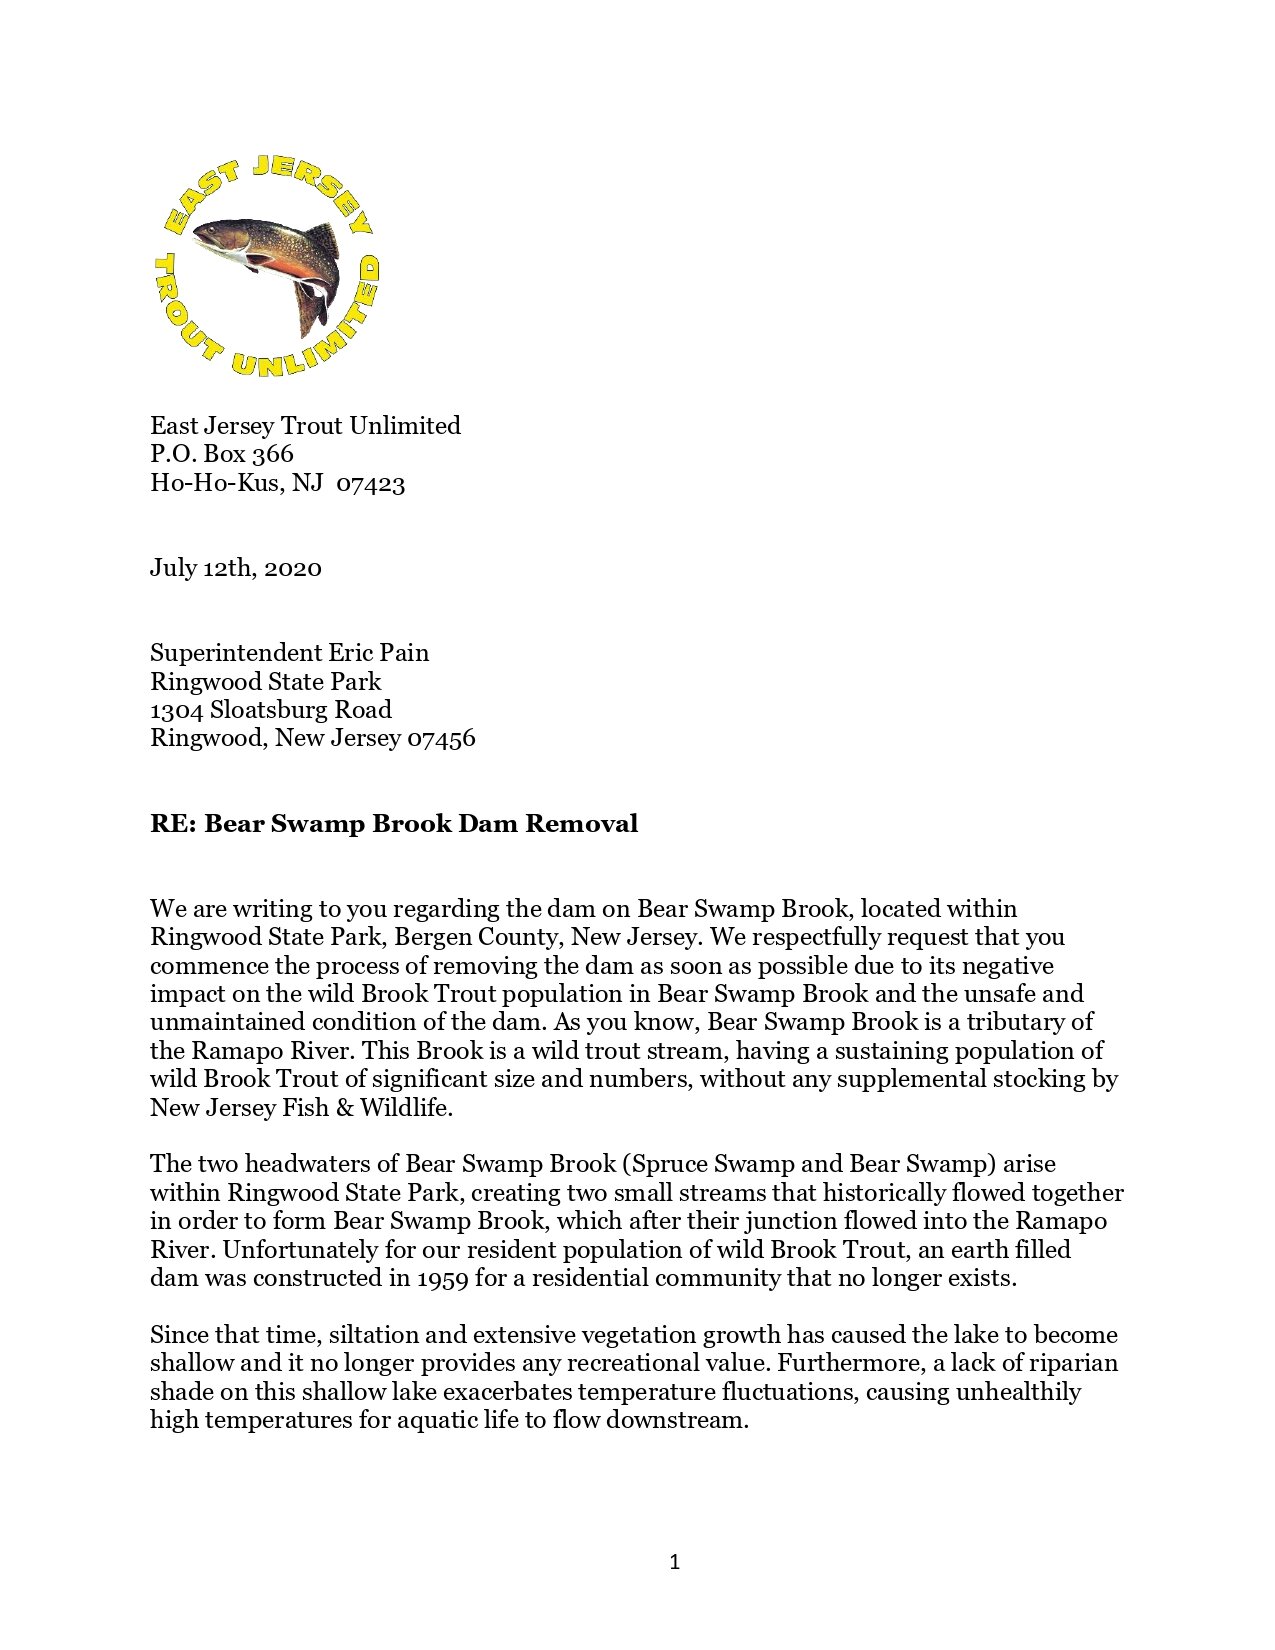 Bear Swamp Brook Dam Letter 07_12_20_page-0001.jpg